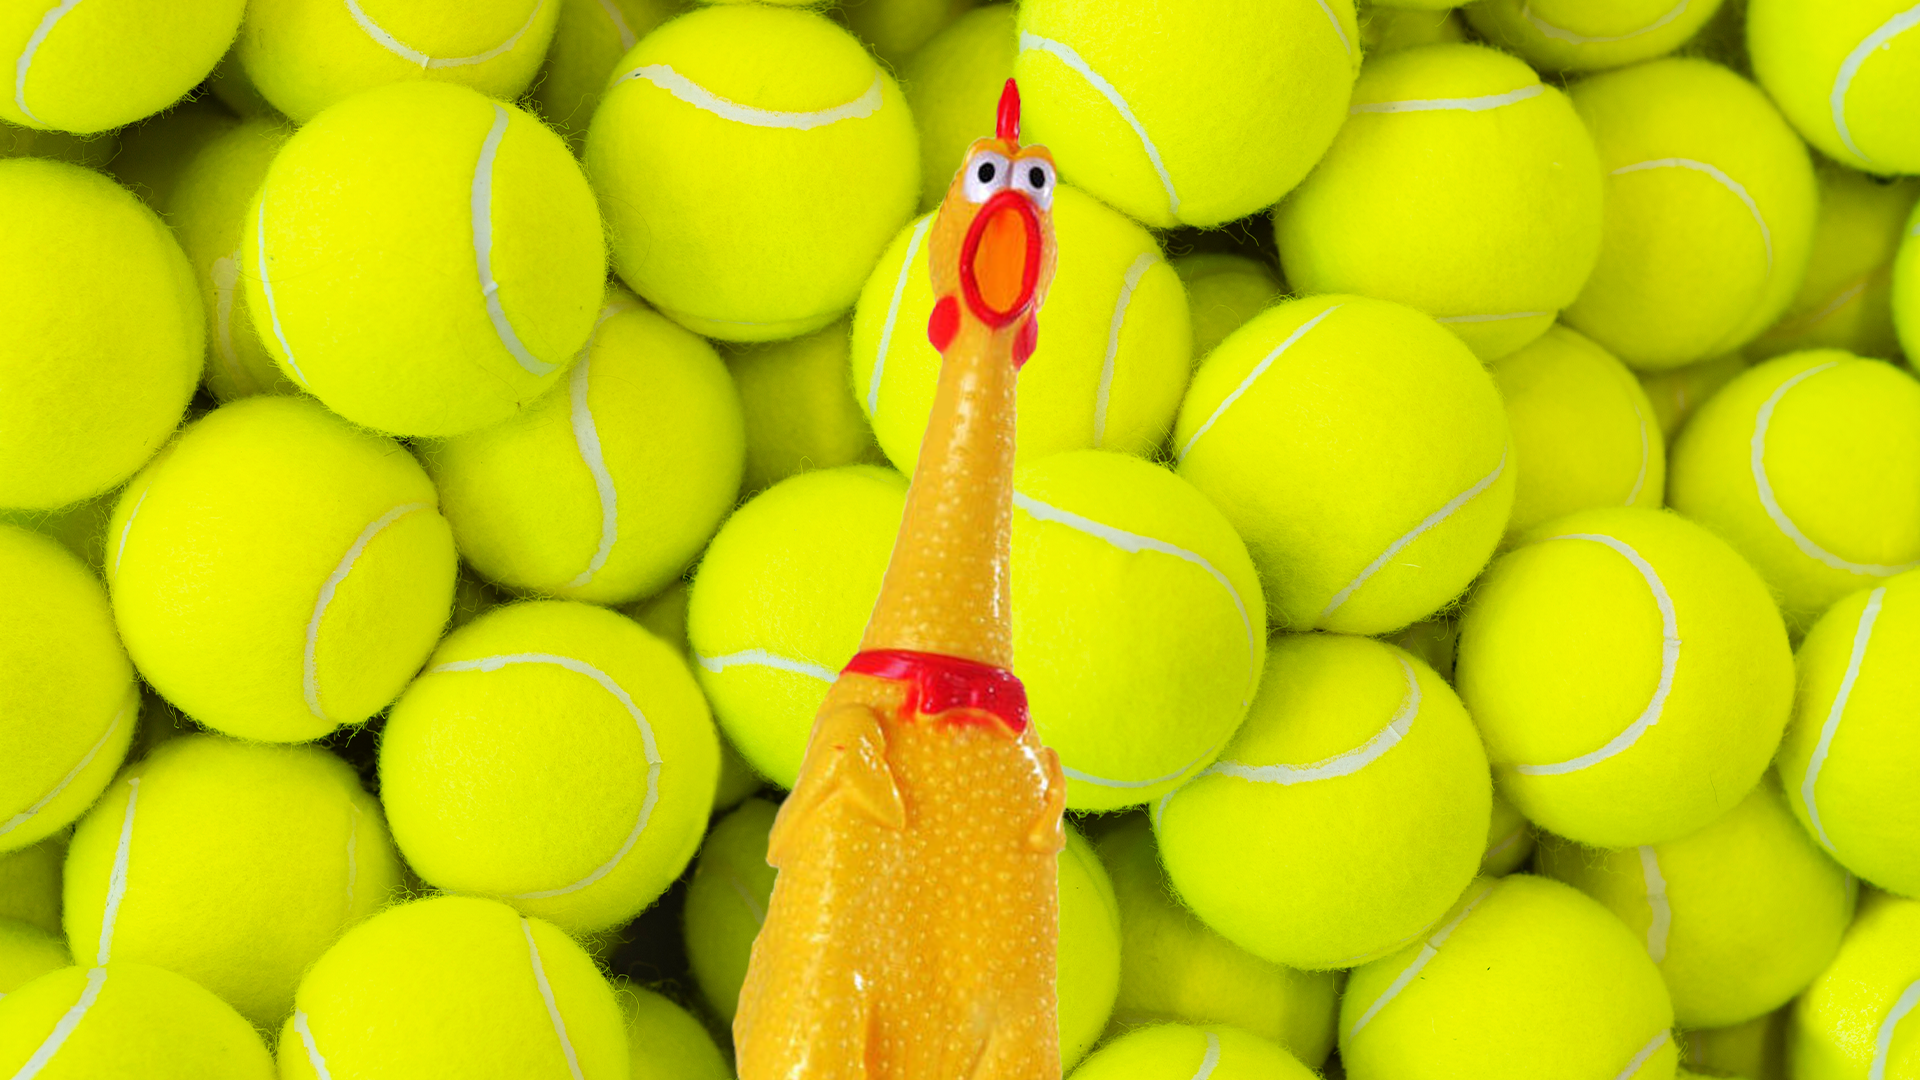 Rubber chicken on a tennis ball background